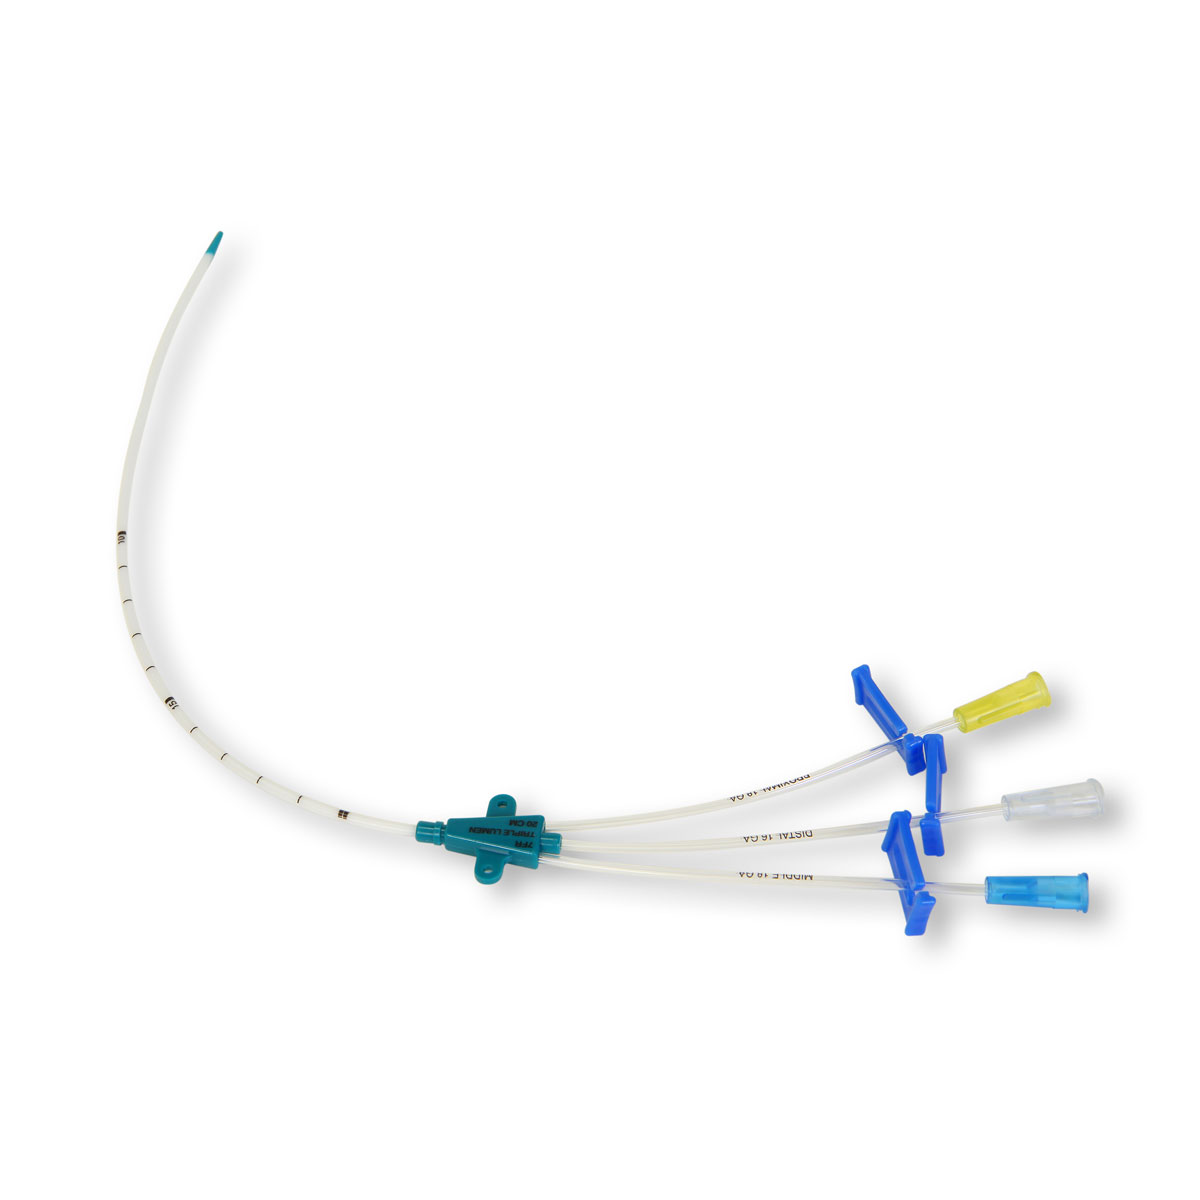 Triple lumen catheter diagram - rdlery